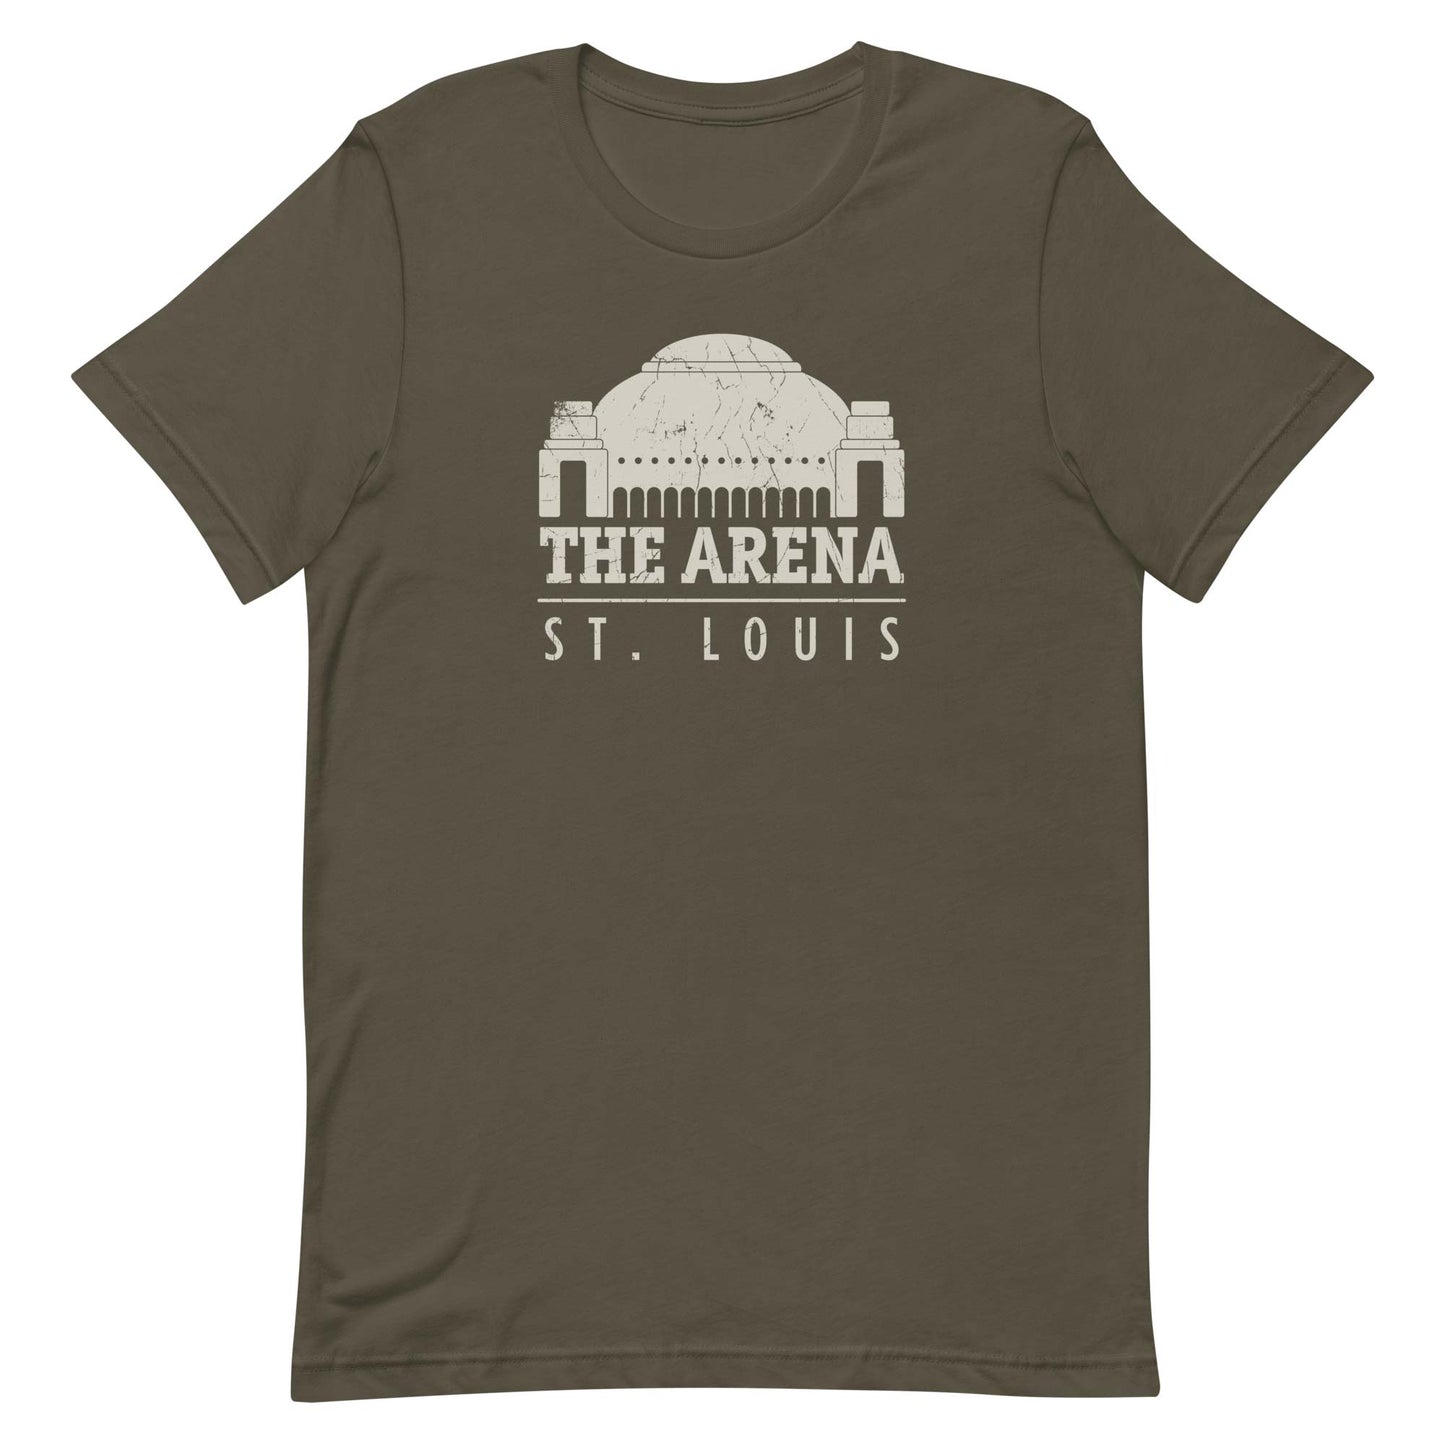 The Arena St. Louis Unisex Retro T-shirt army